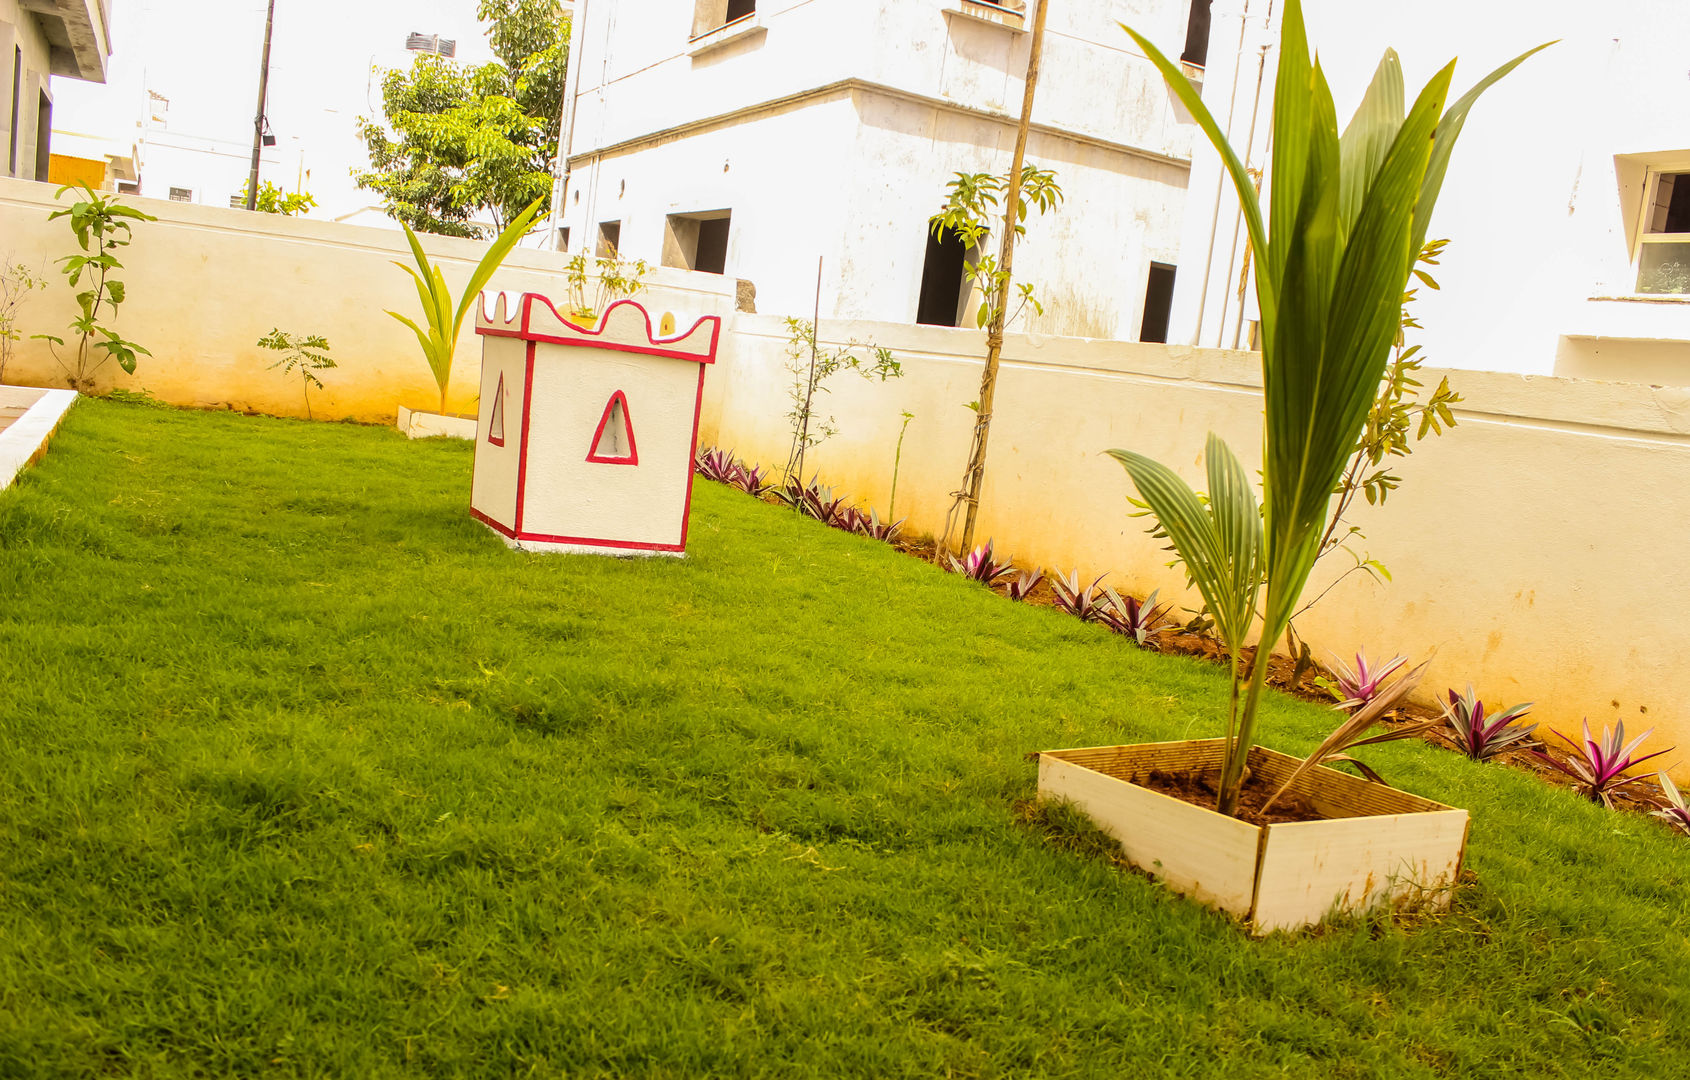 Villa at Appa Junction, Hyderabad., Happy Homes Designers Happy Homes Designers Внутрішній сад Внутрішнє озеленення